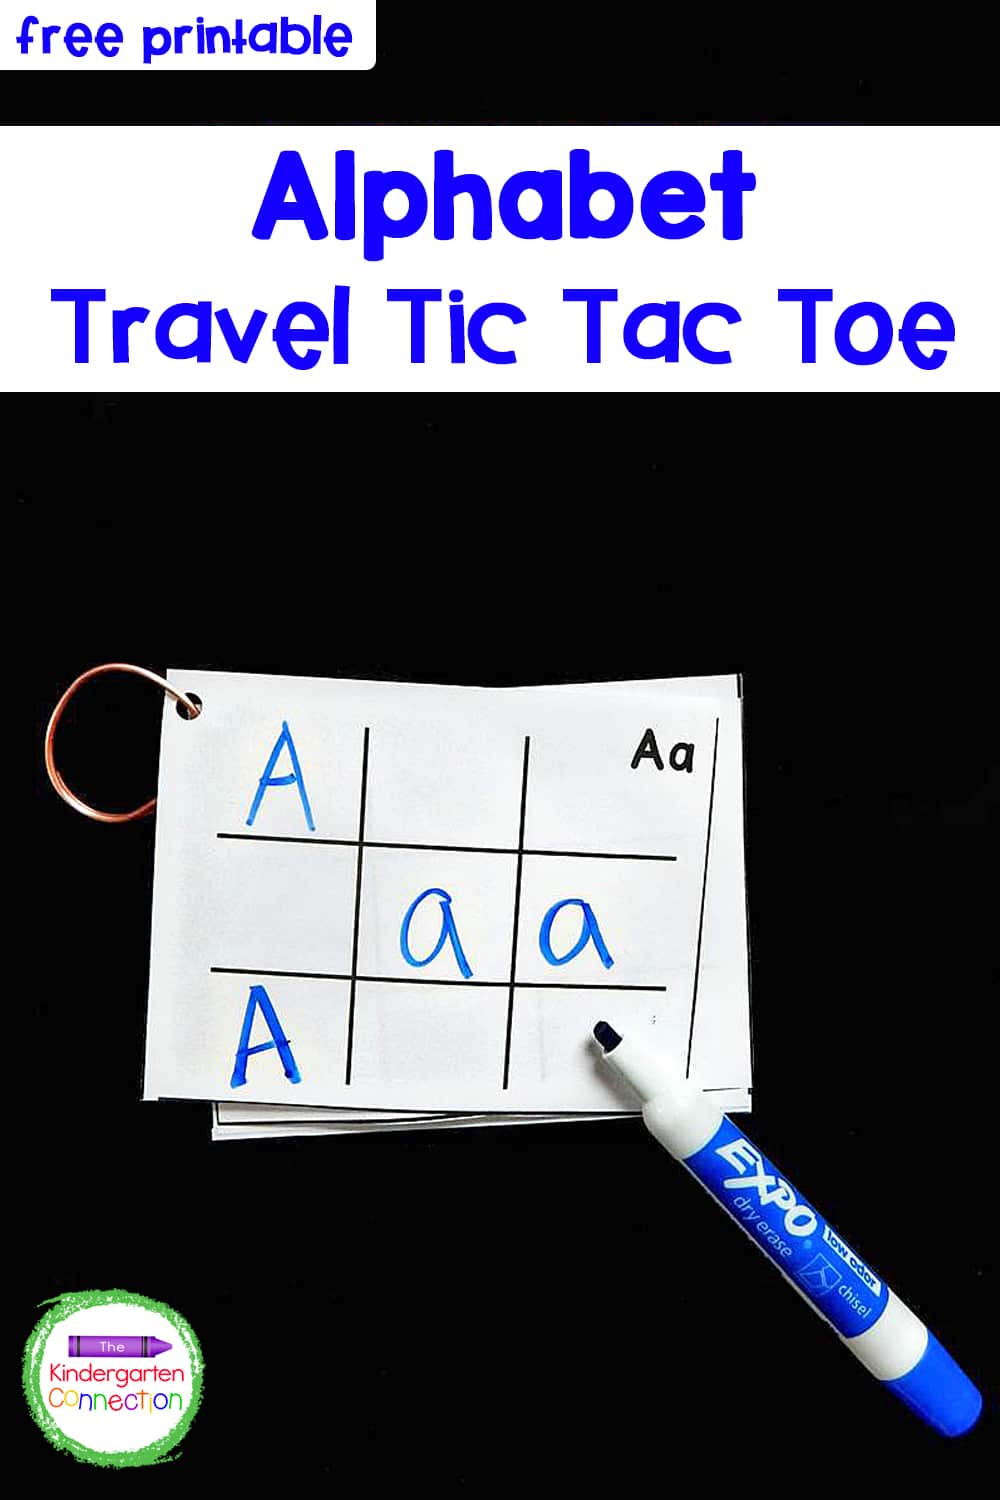 Tic Tac Toe - Play free